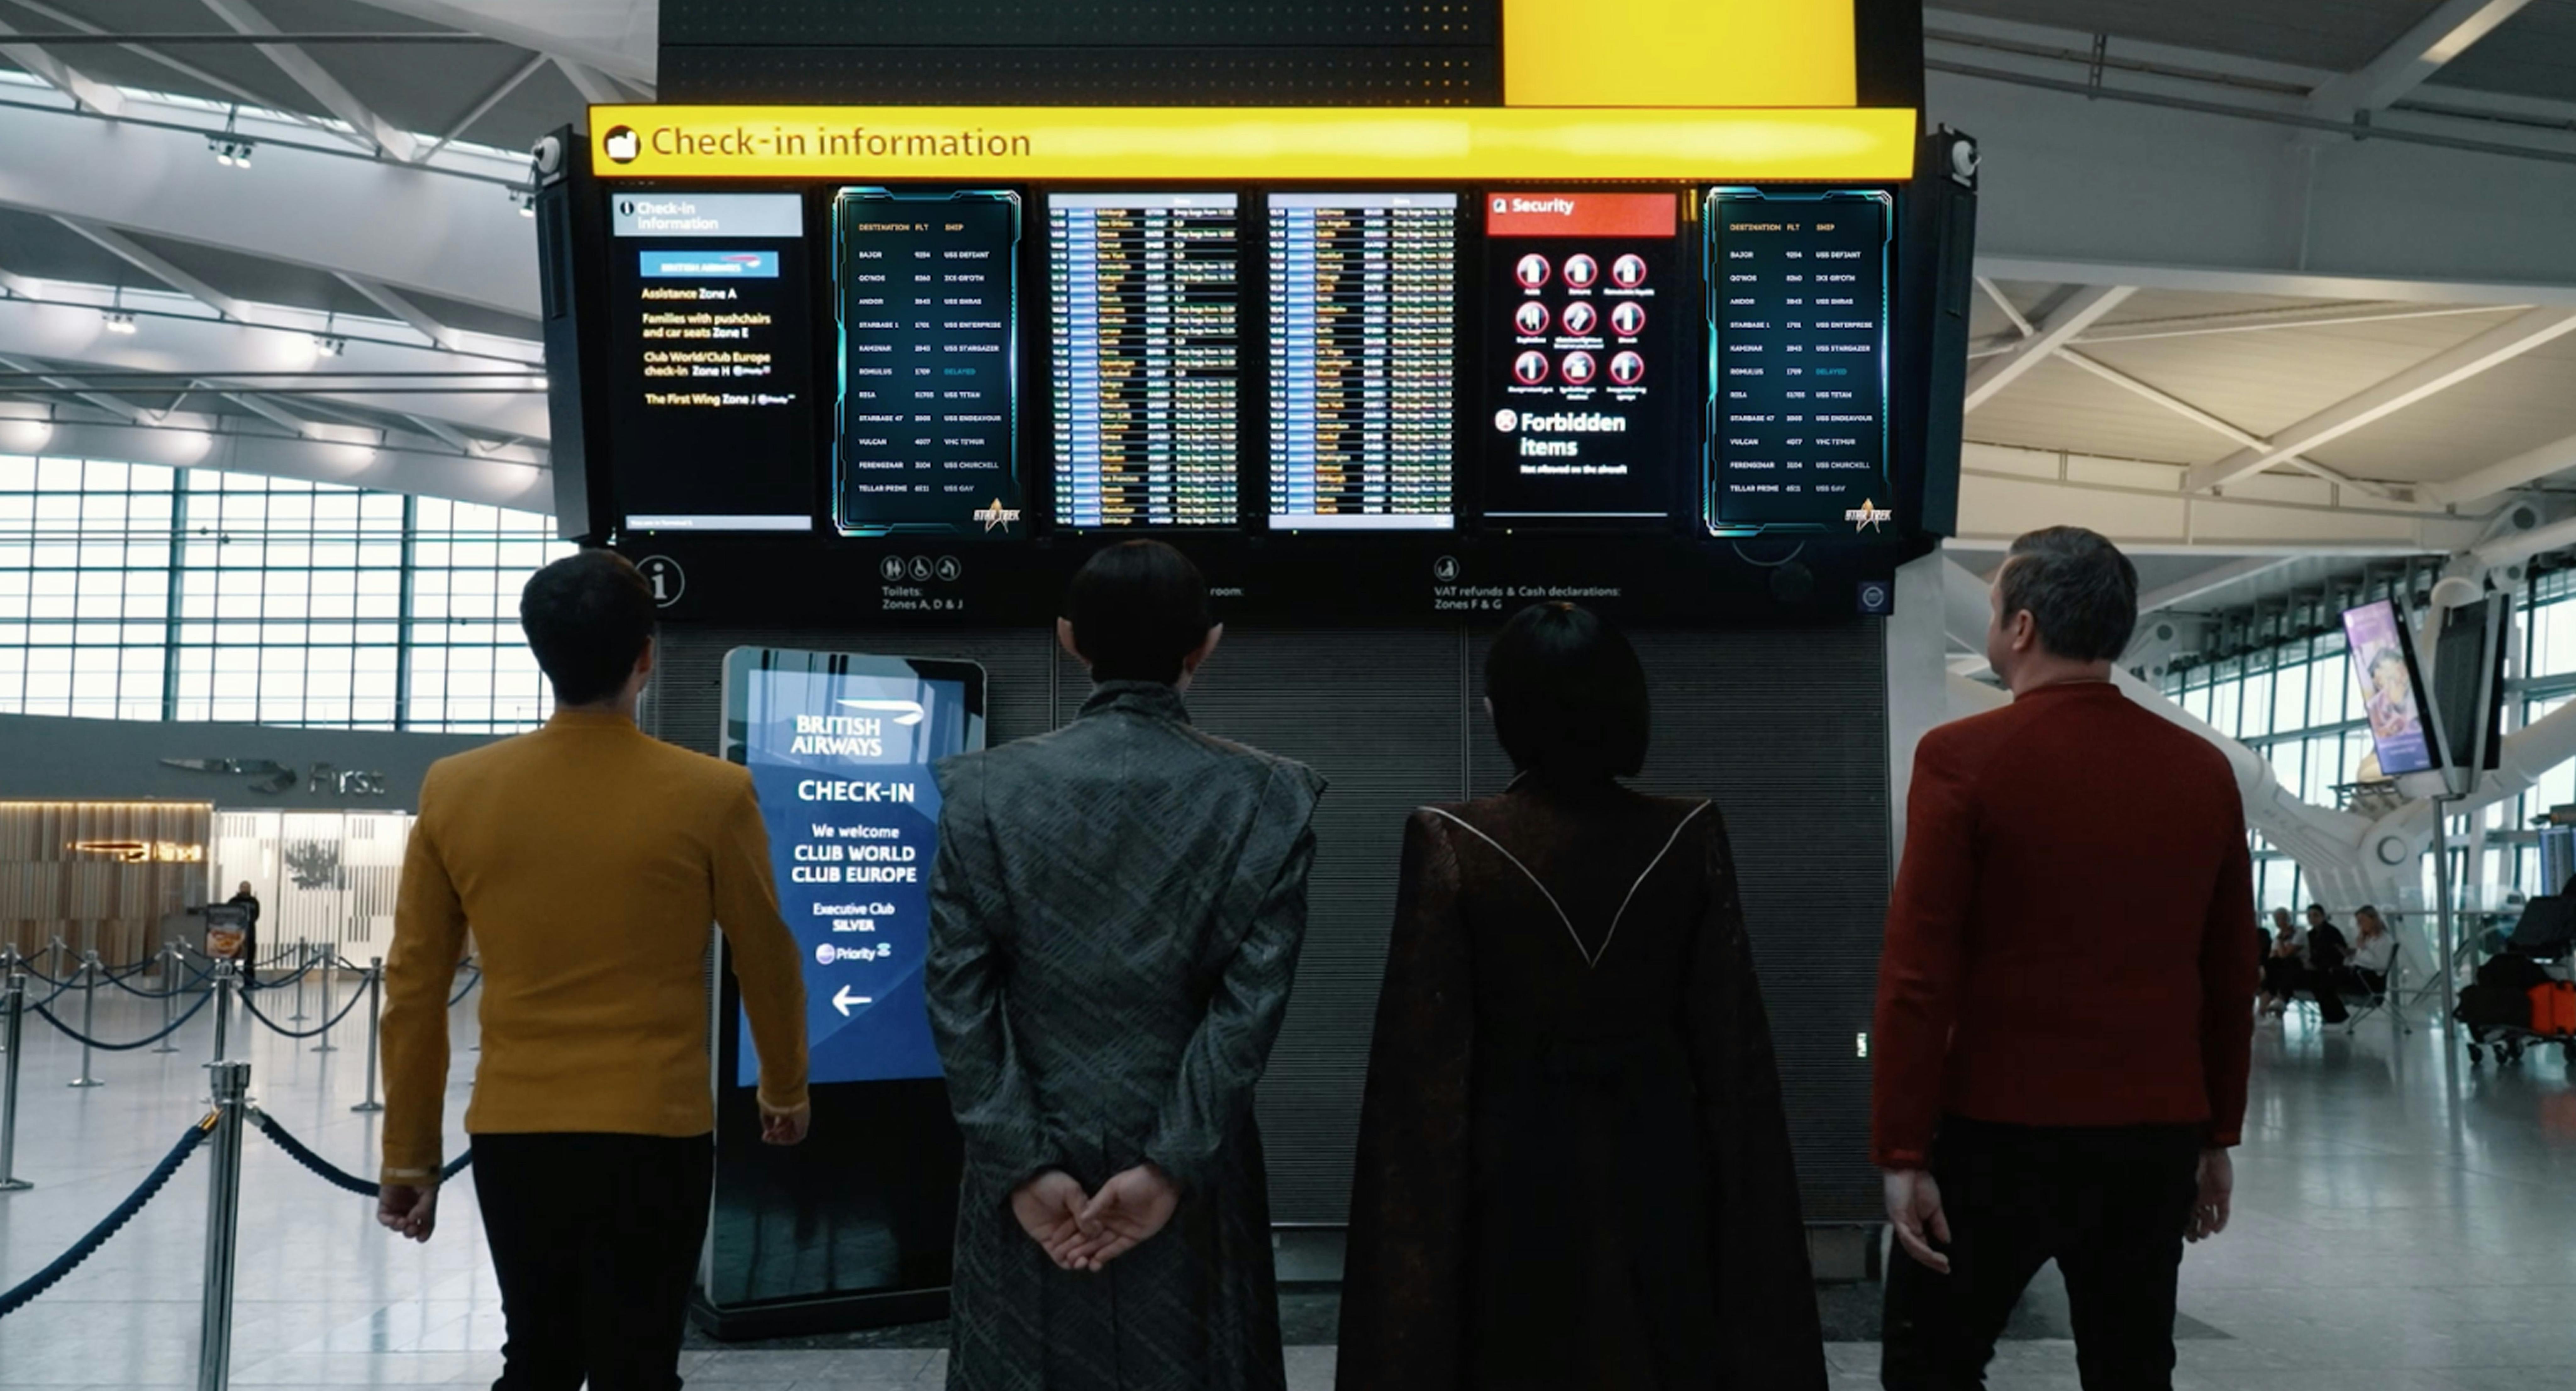 British Airways employees dressed as Star Trek Starfleet passengers at Heathrow Airport